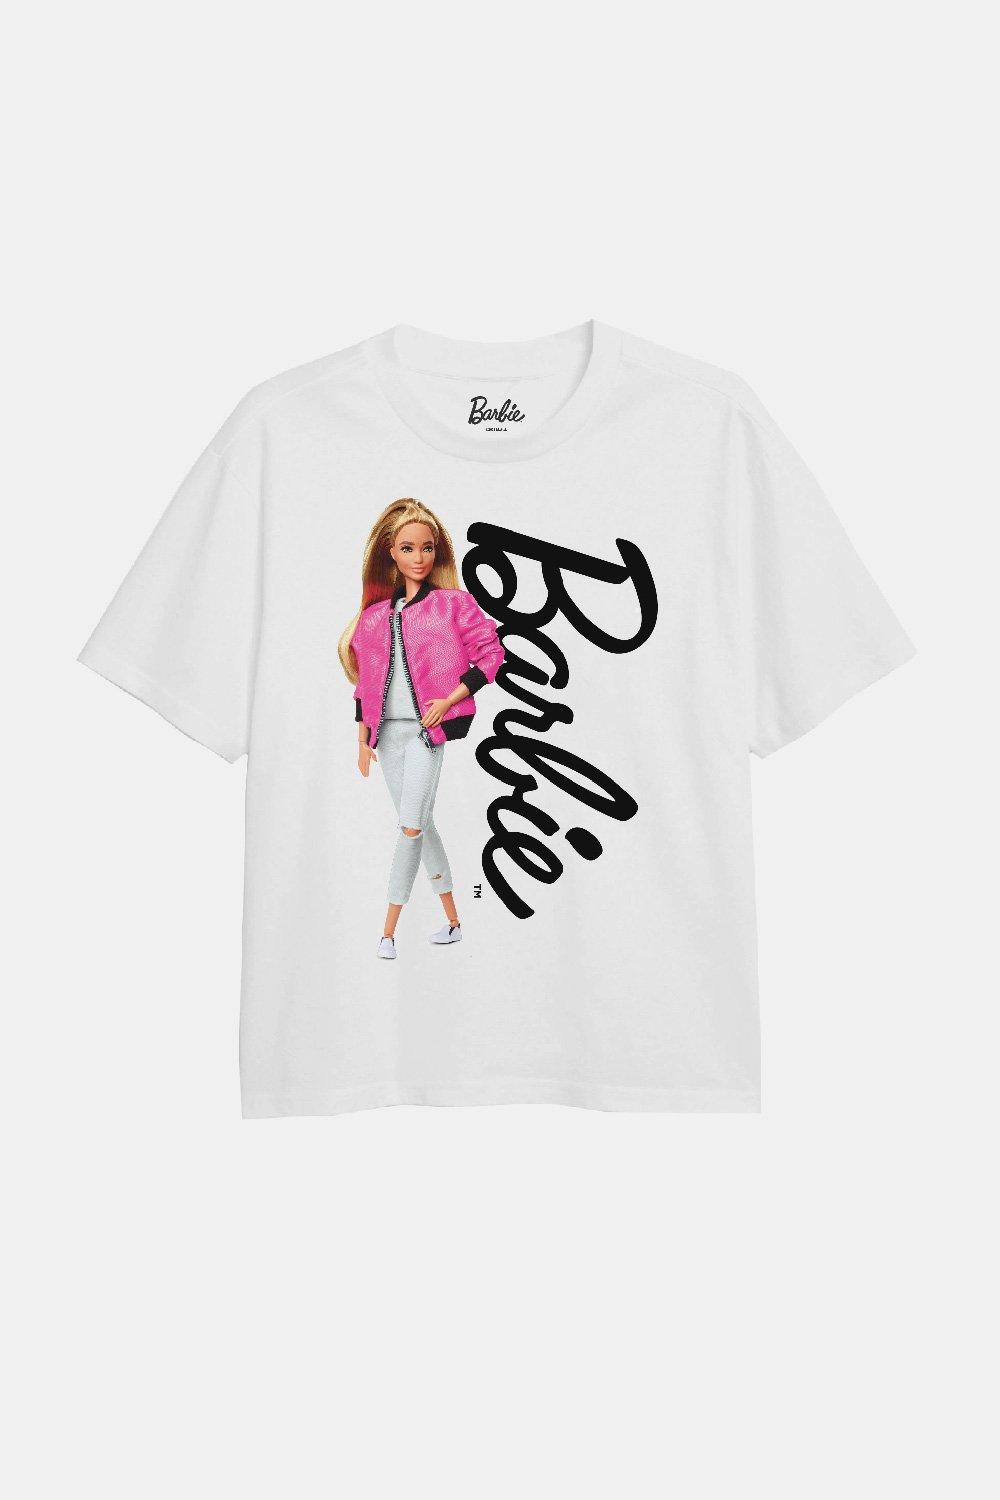 Iconic Barbie Girls T-Shirt